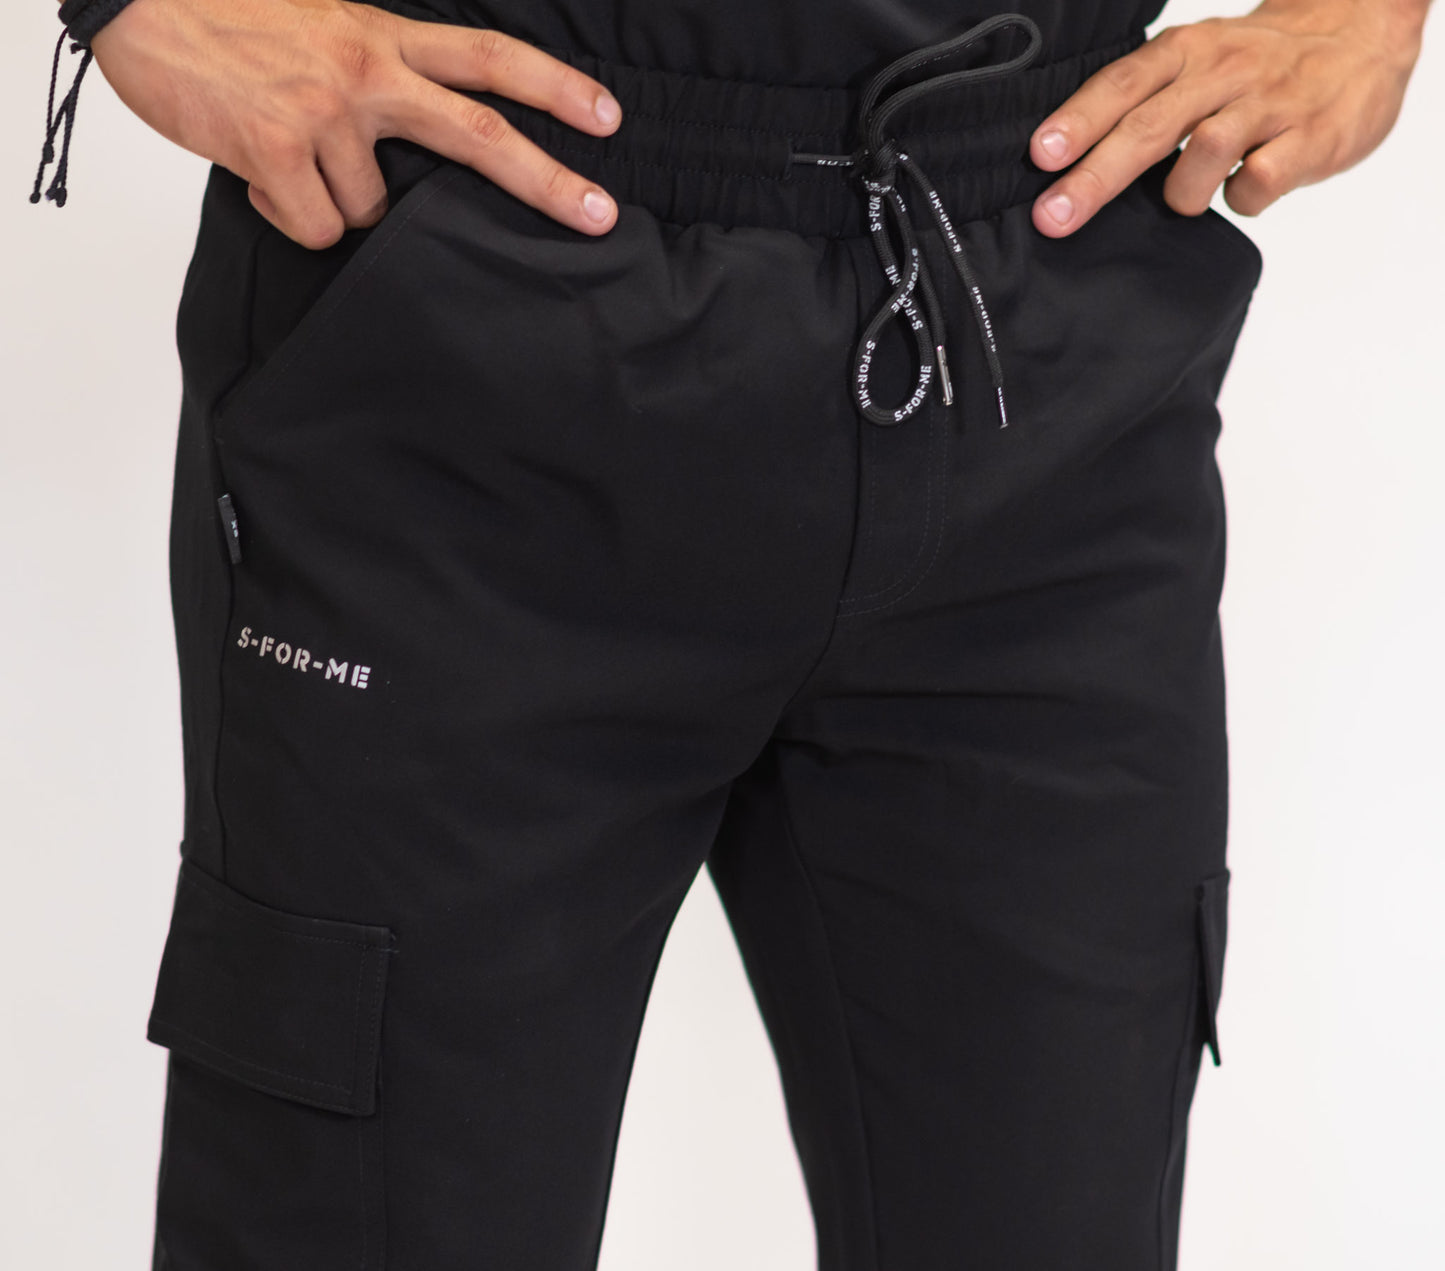 Pantalon Antifluido Hombre 300 Negro